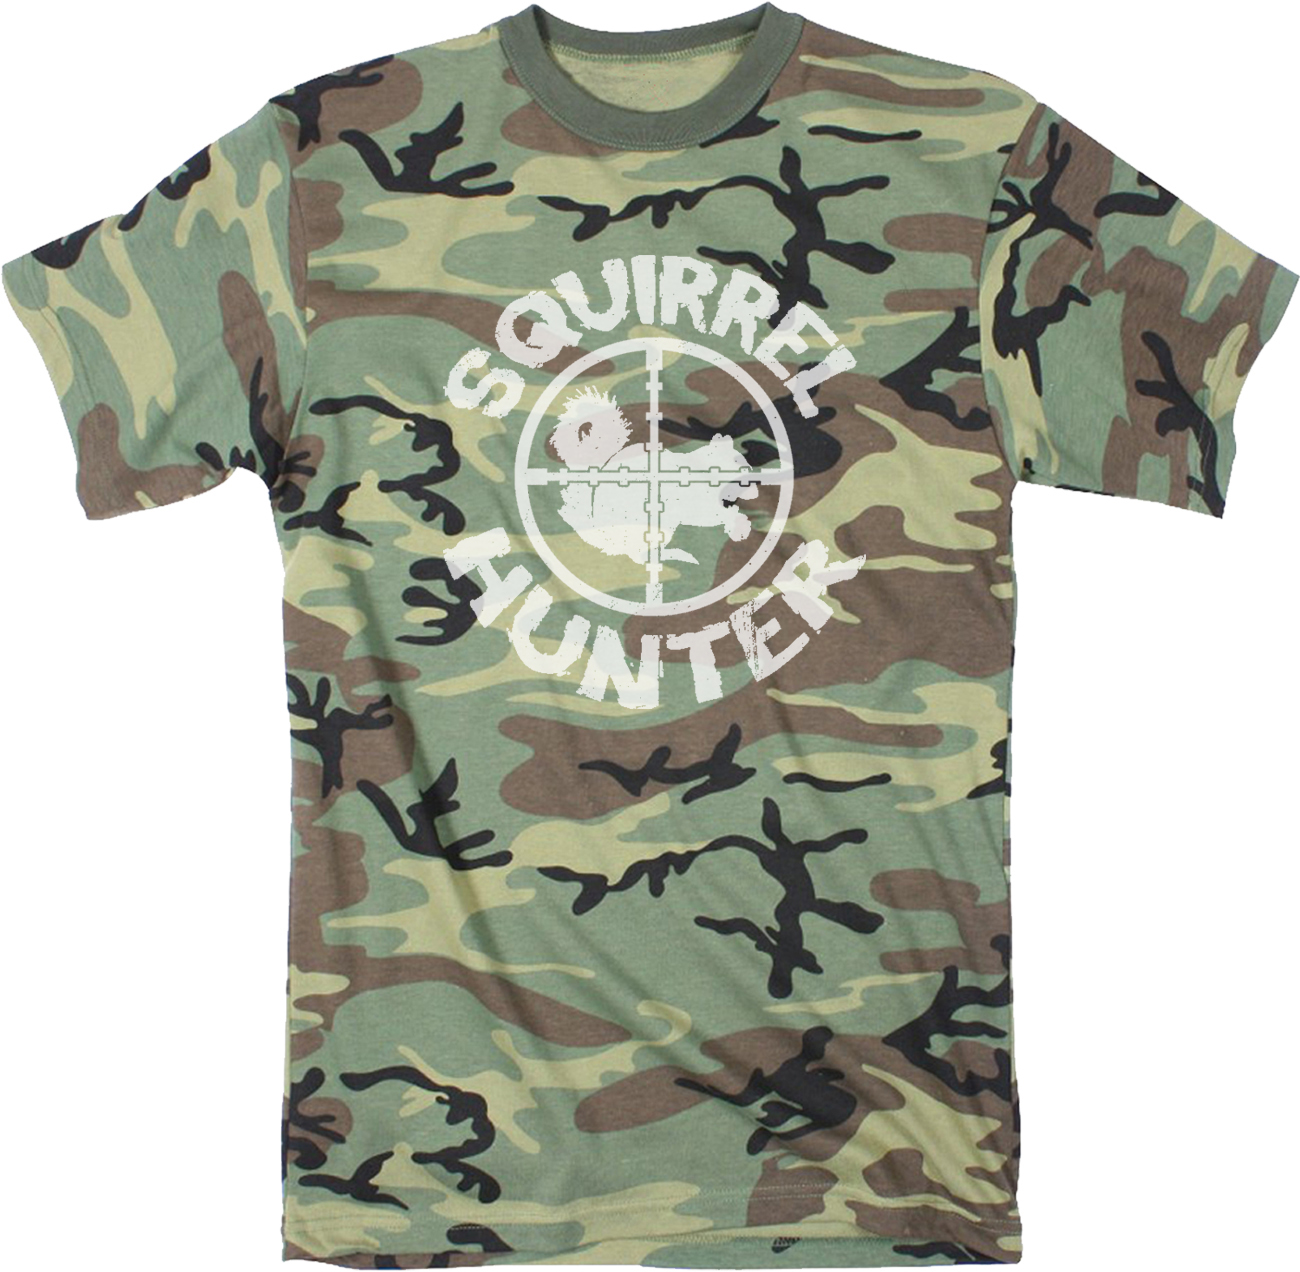 Crazy Dog Tshirts Mens Squirrel Hunter Funny Animal Hunting Camouflage T shirt (Camo)